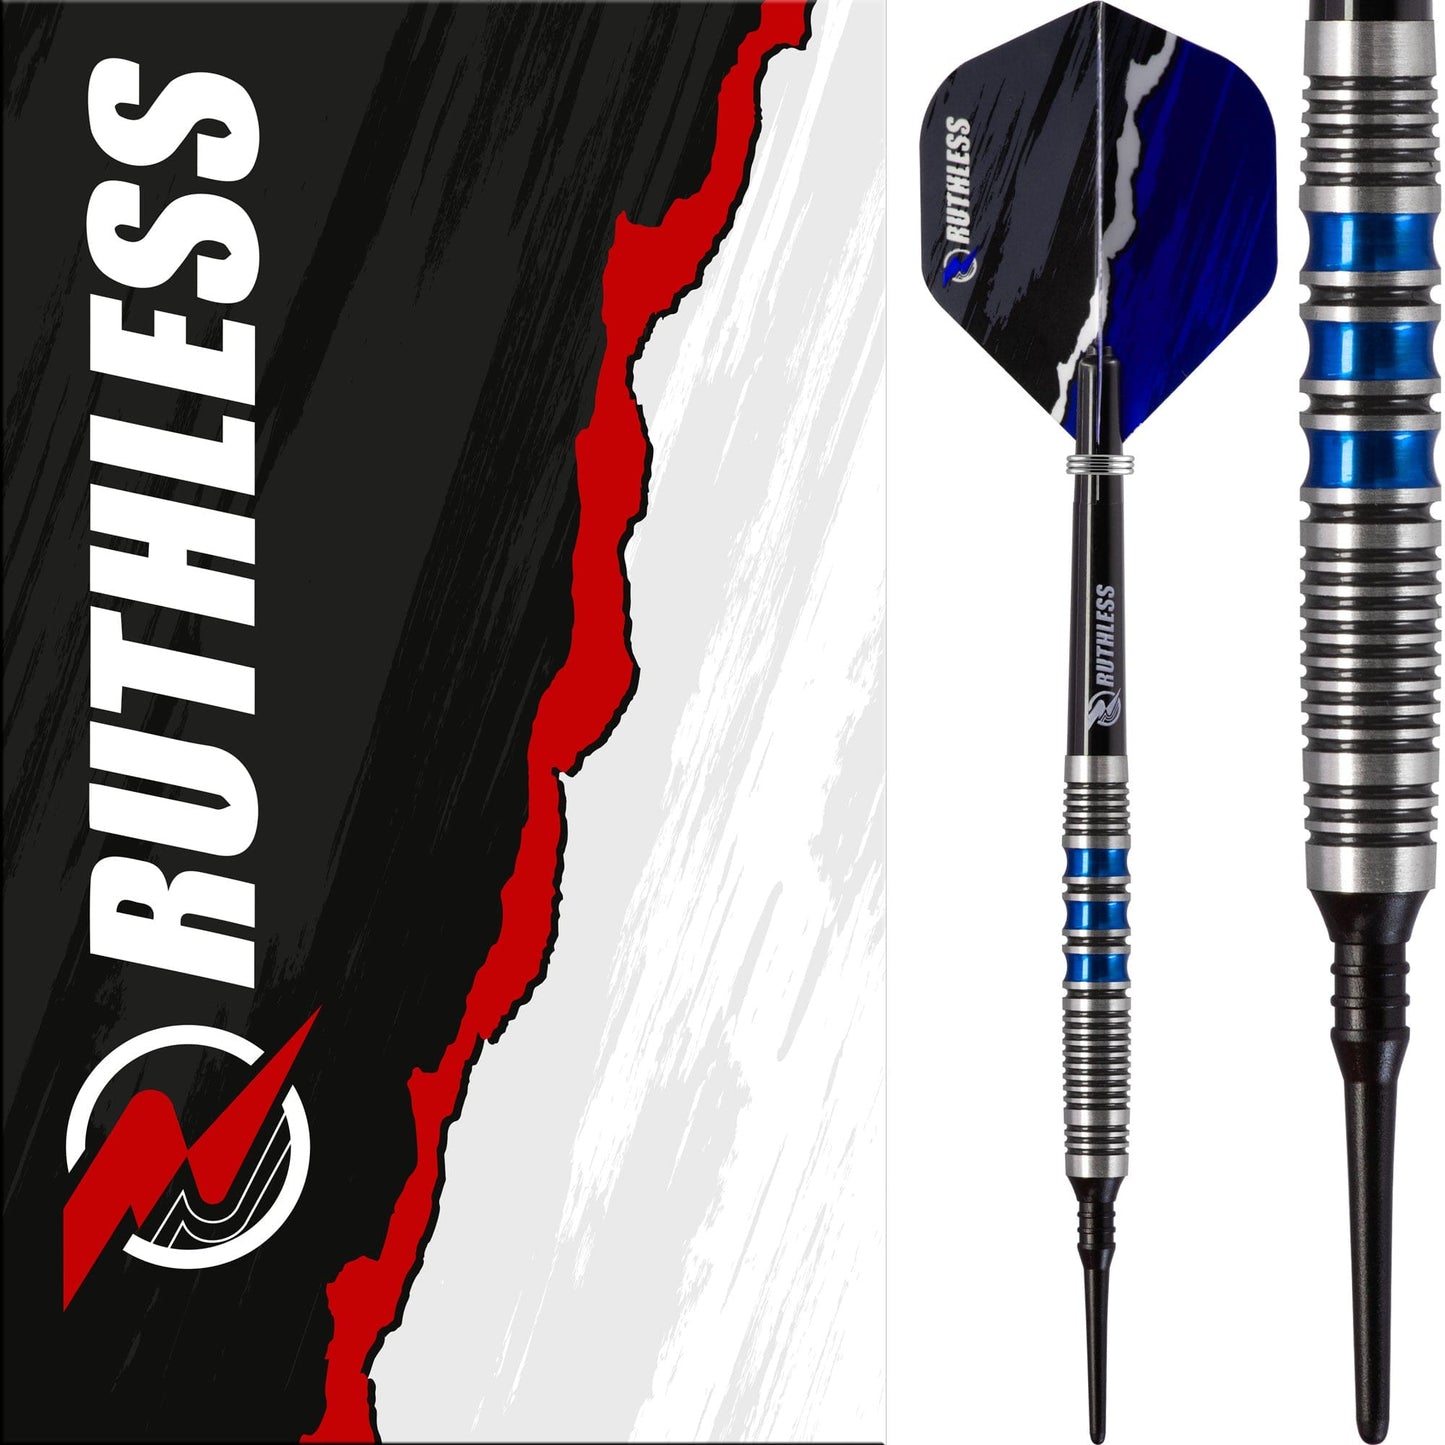 Ruthless Blue Falcon Darts - Soft Tip Tungsten - BW 16.0g - Blue - 18g 18g